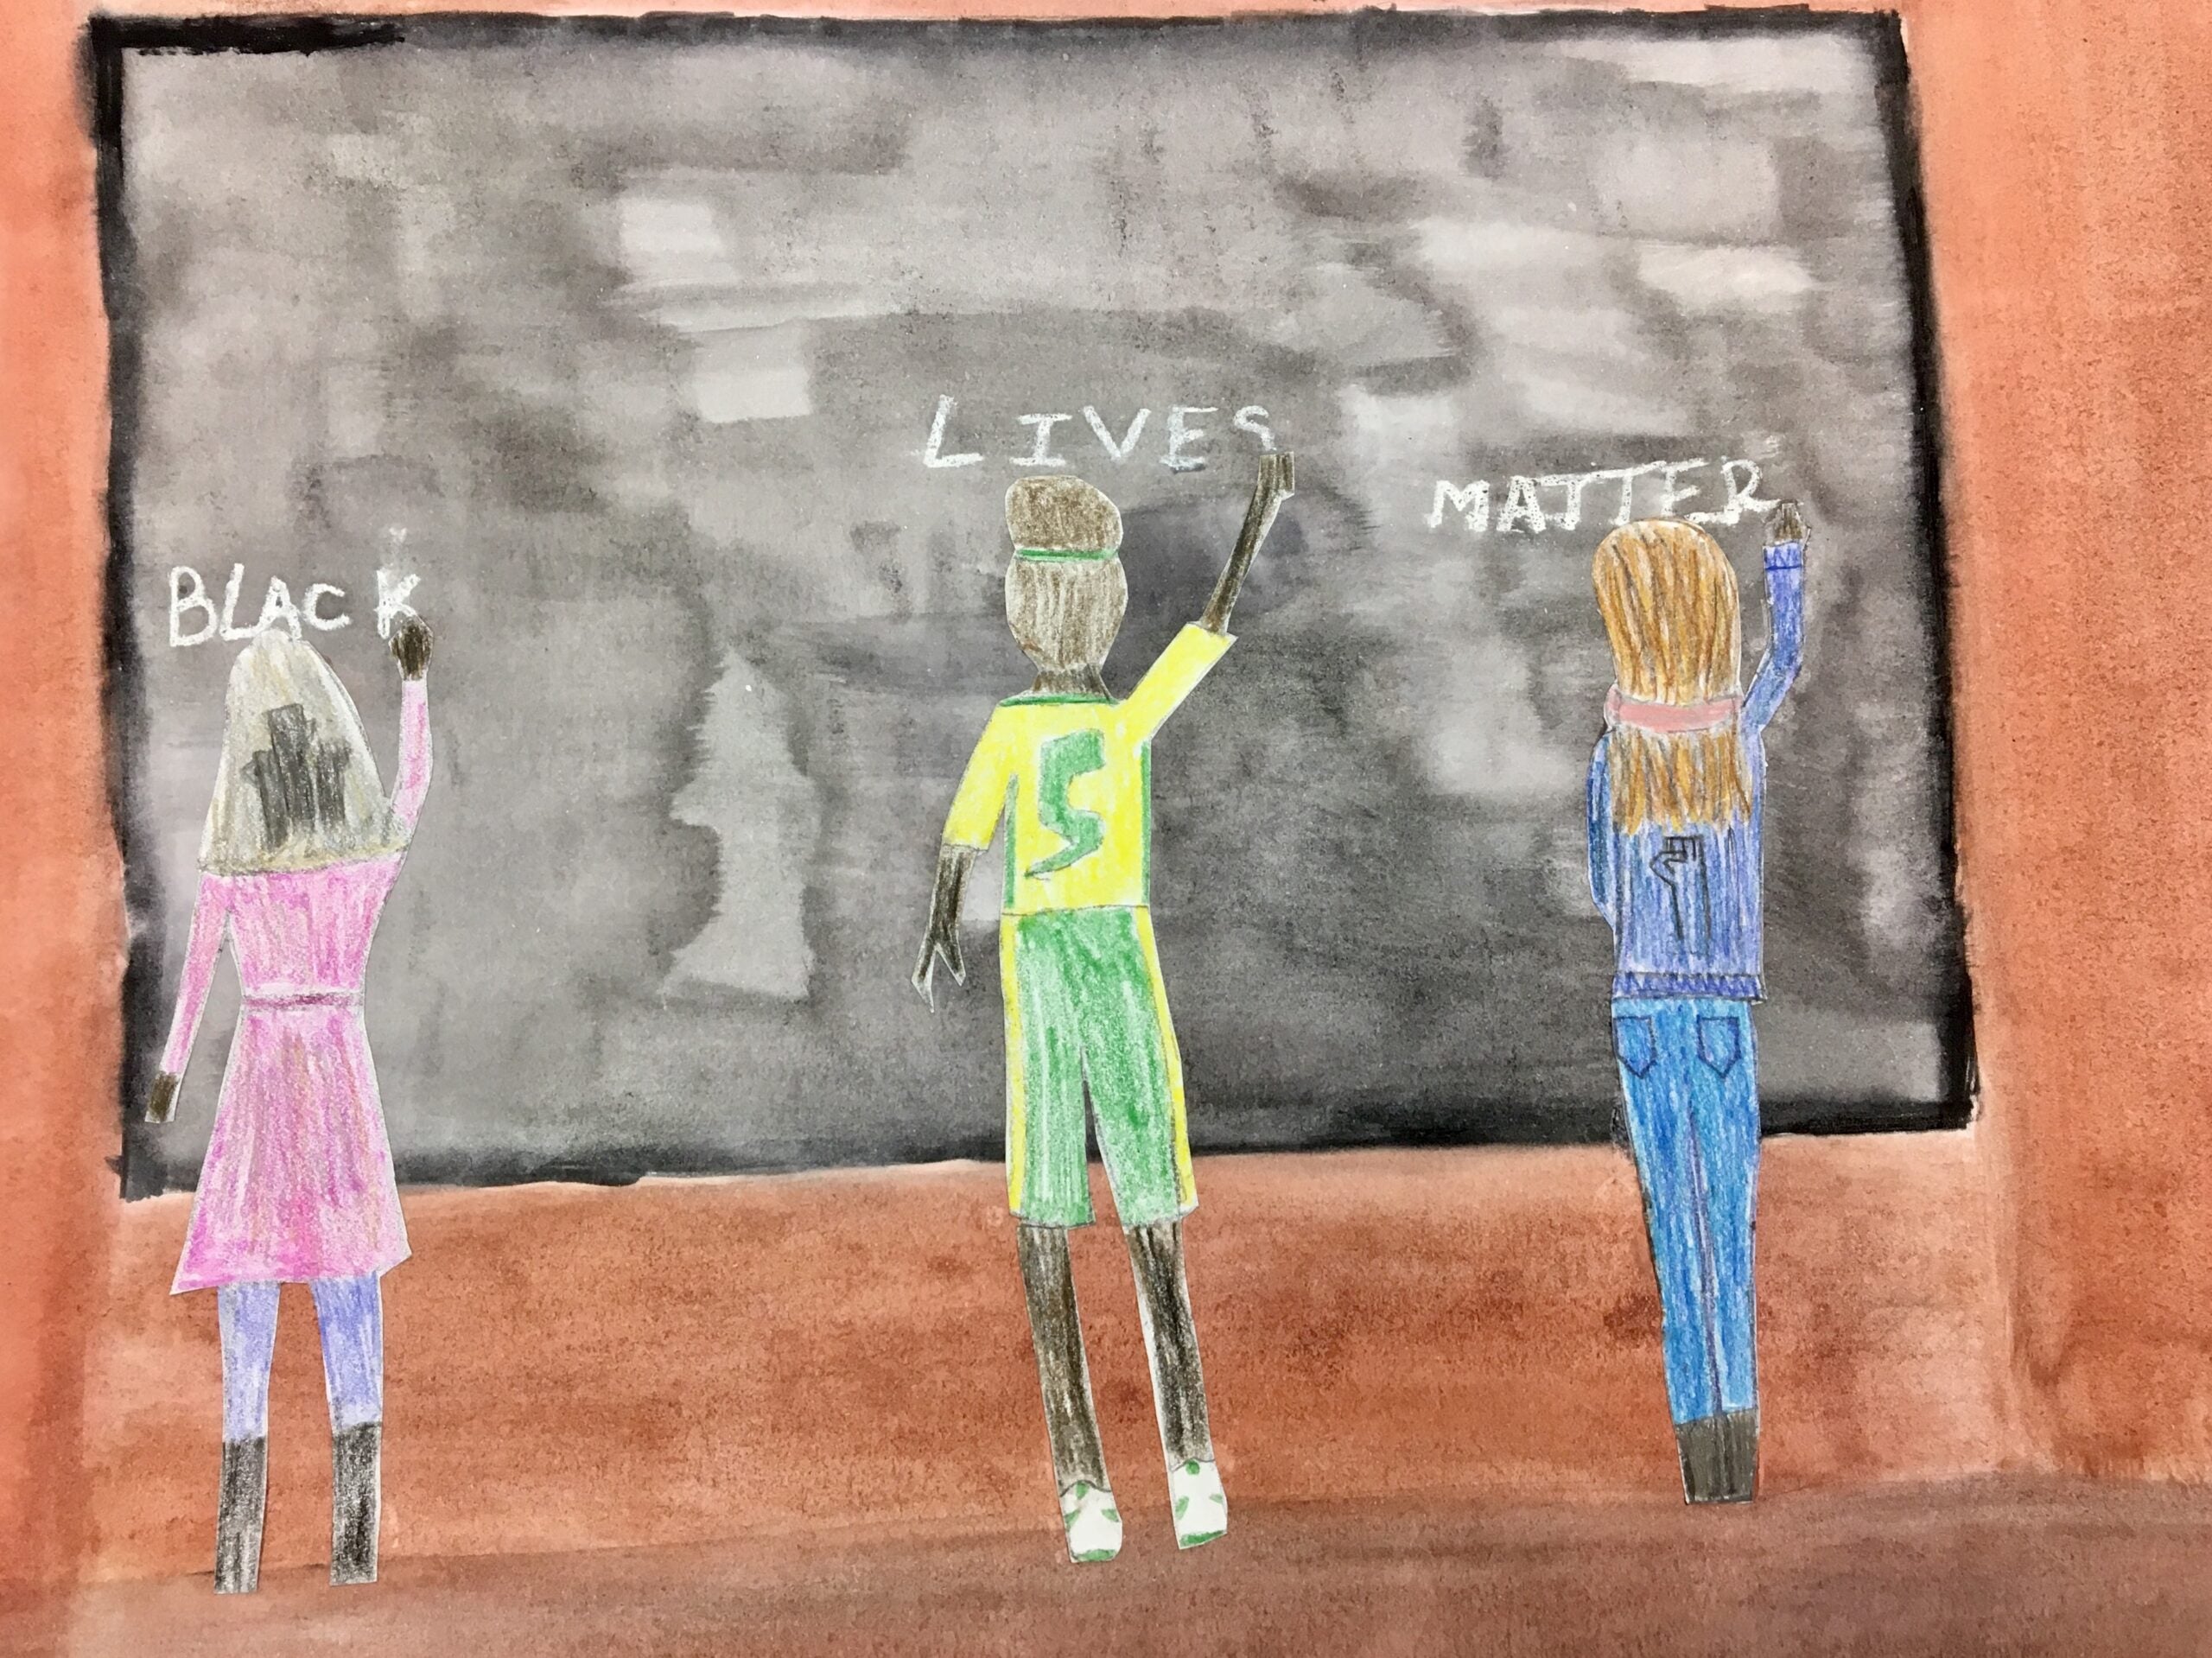 Student artwork depicting students writing Black Lives Matter on a blackboard.